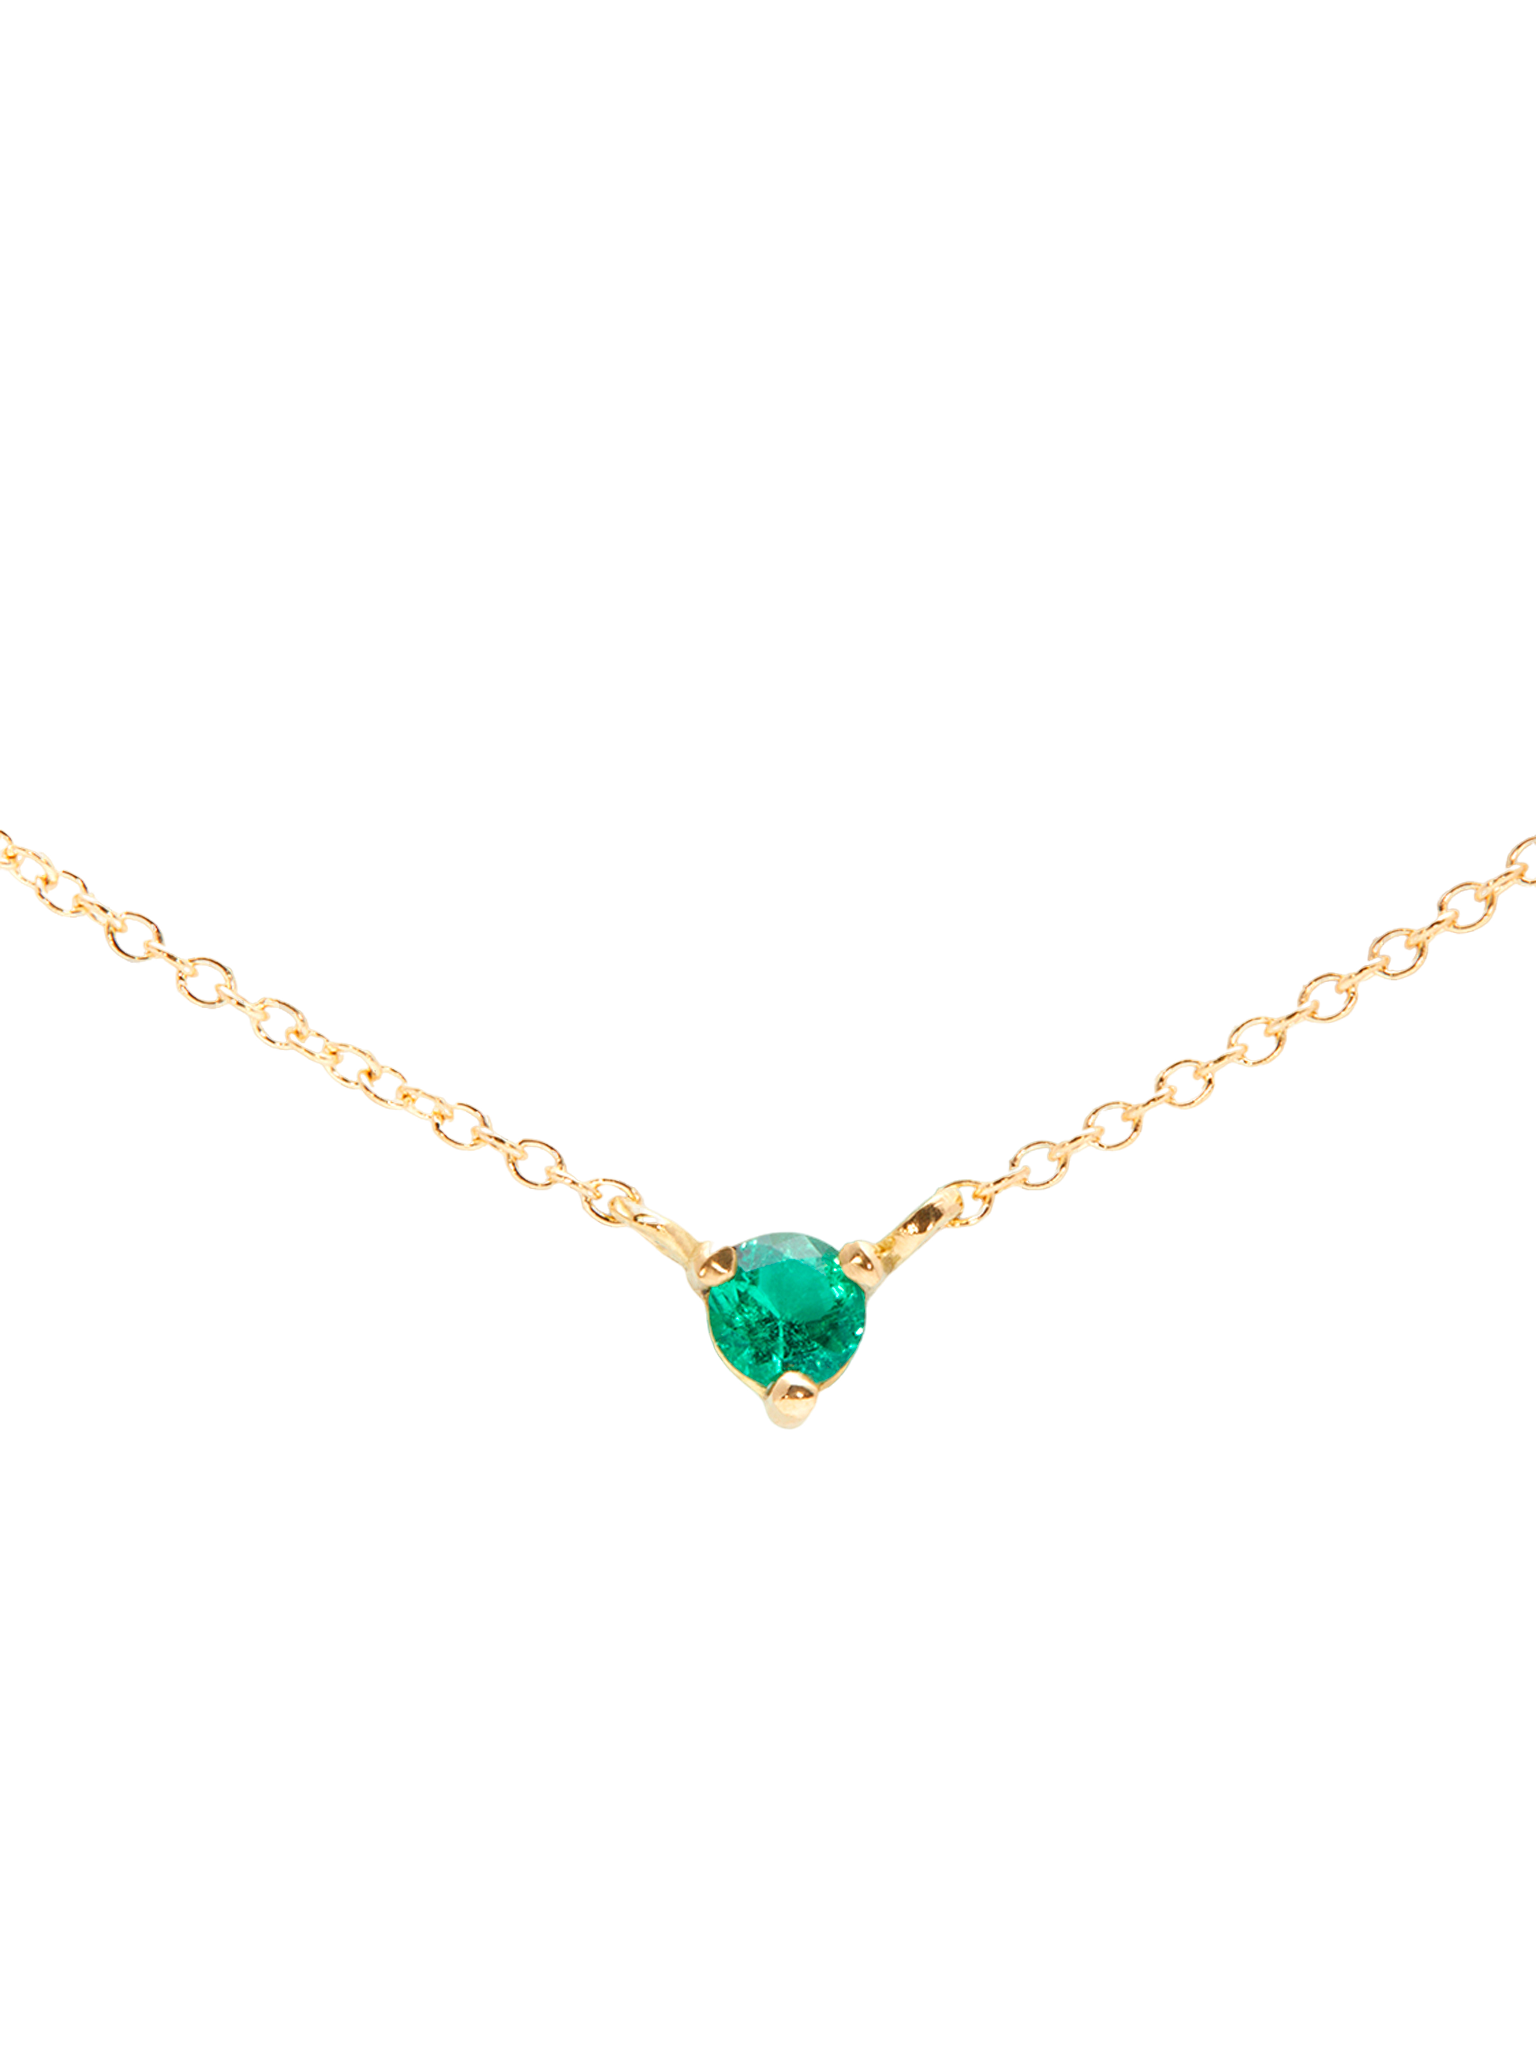 Birthstone emerald necklace